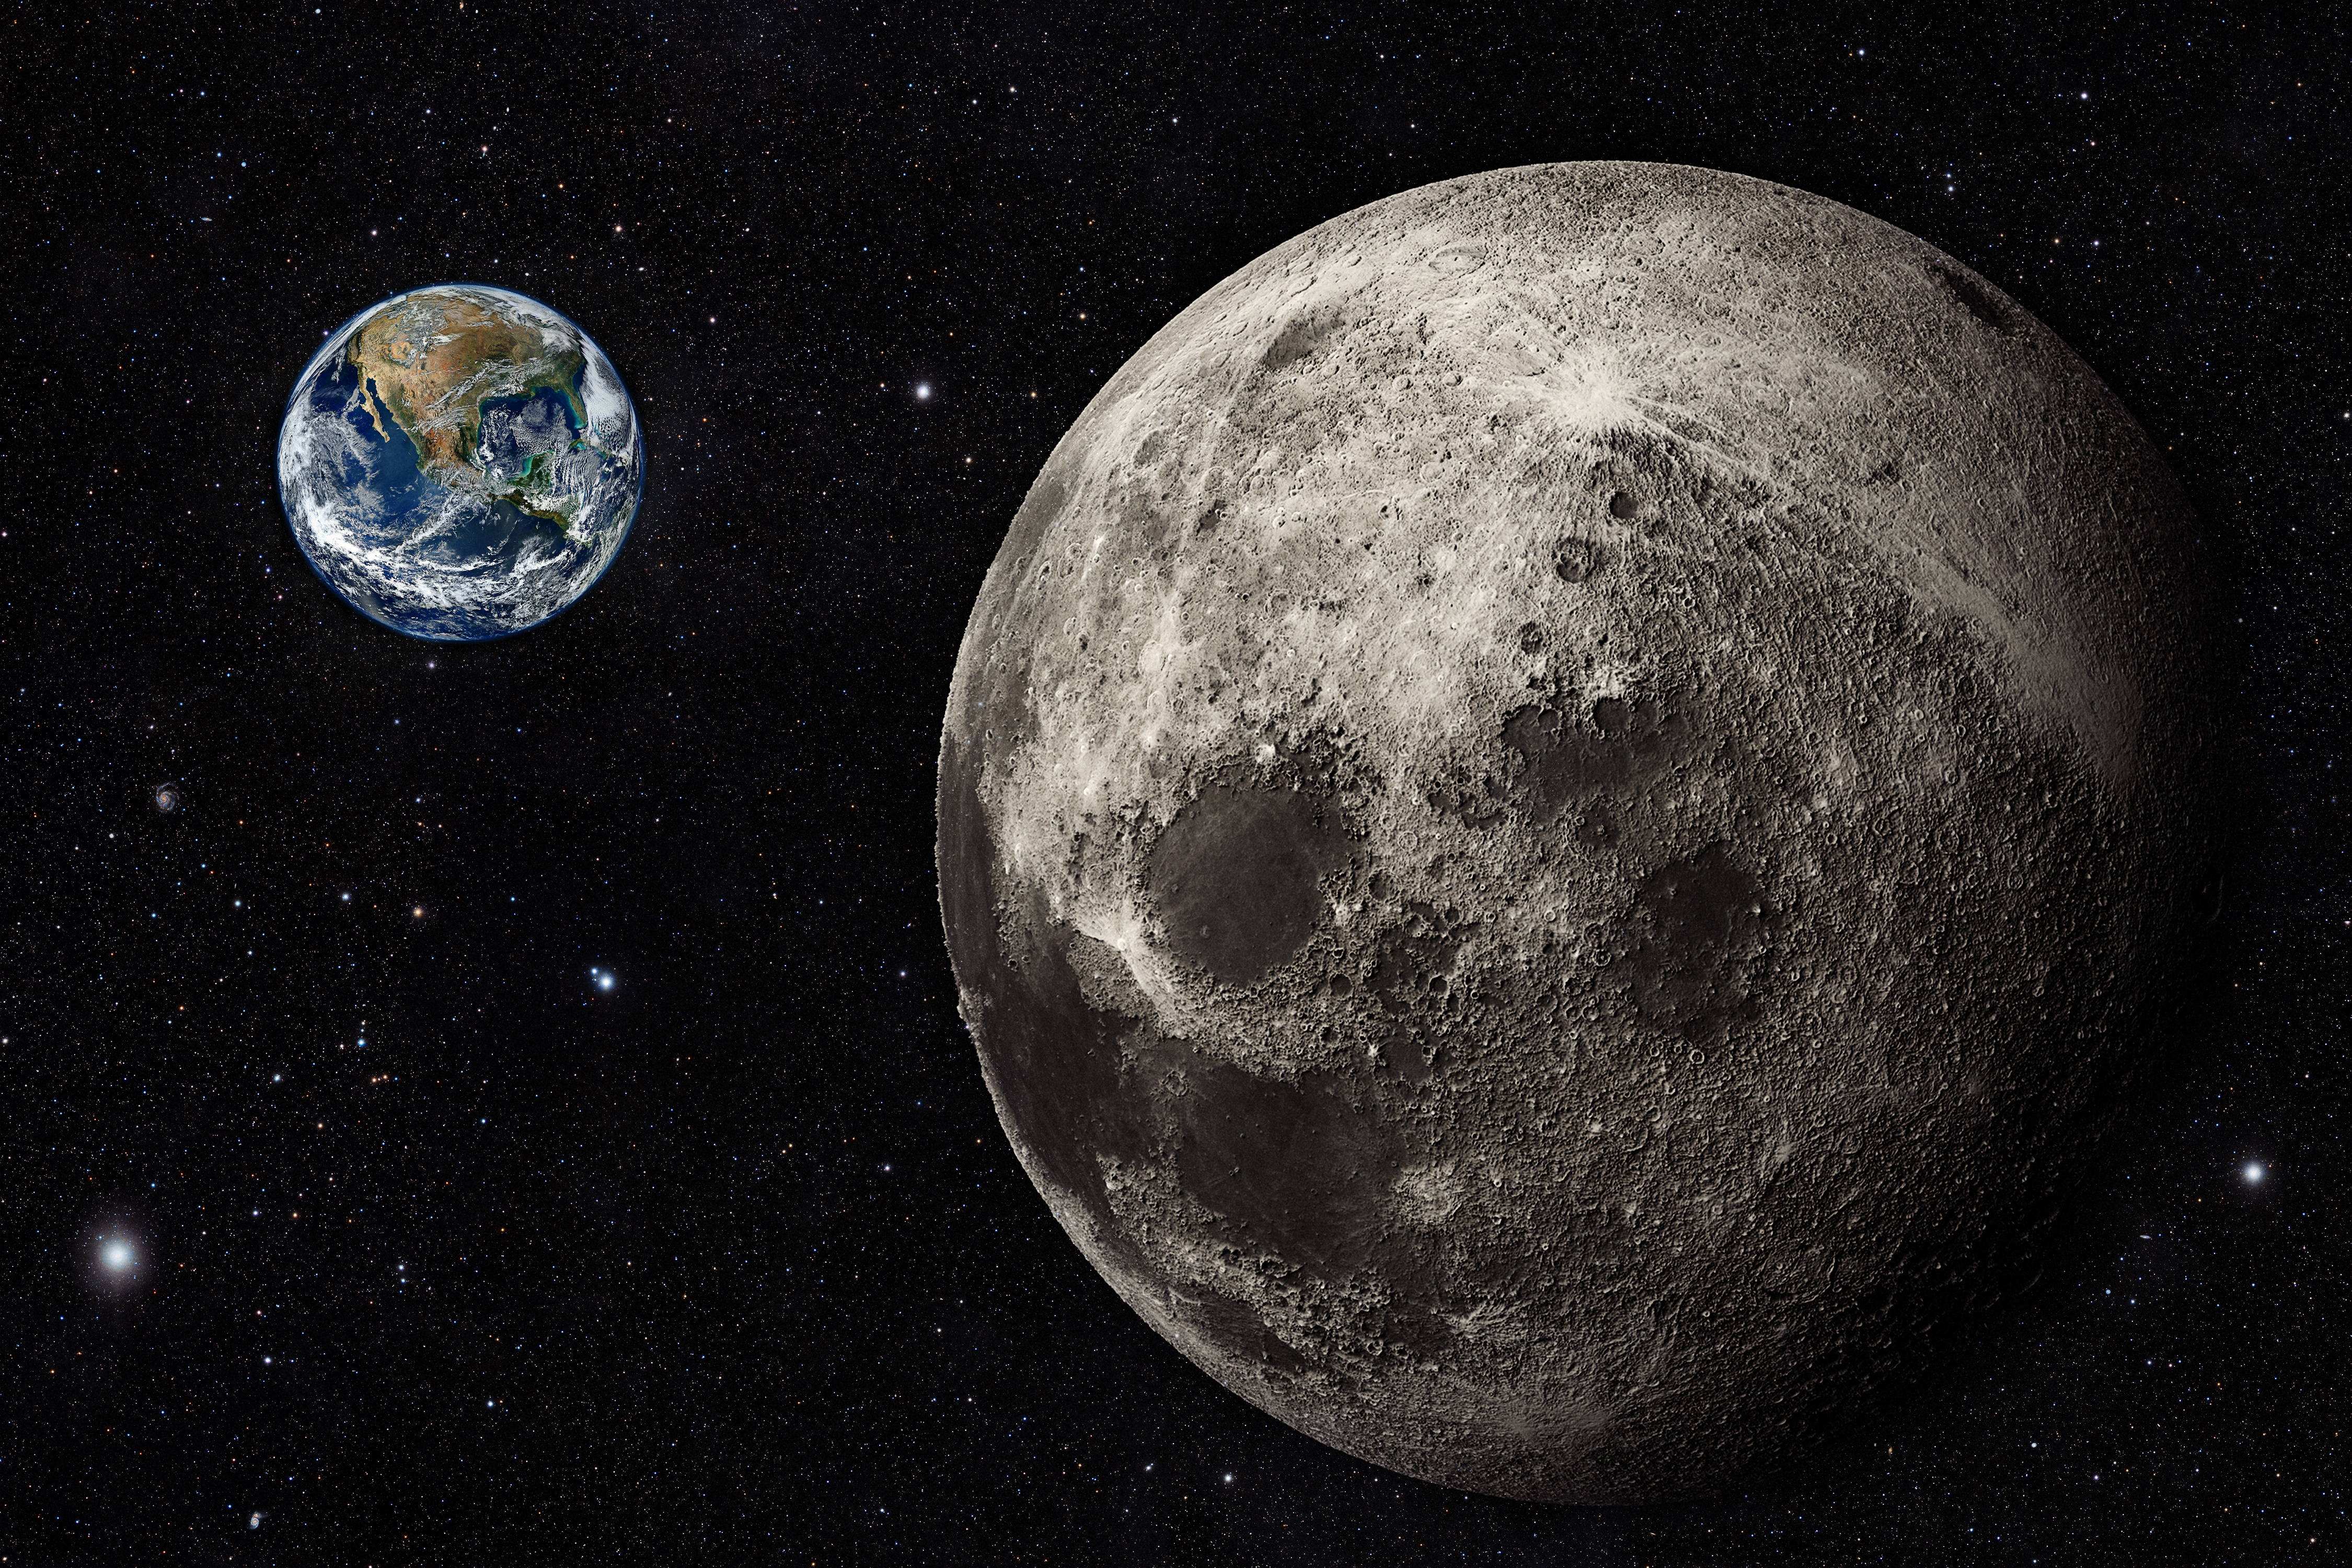  Moon  4k  Ultra HD Wallpaper  Background Image 4500x3000 